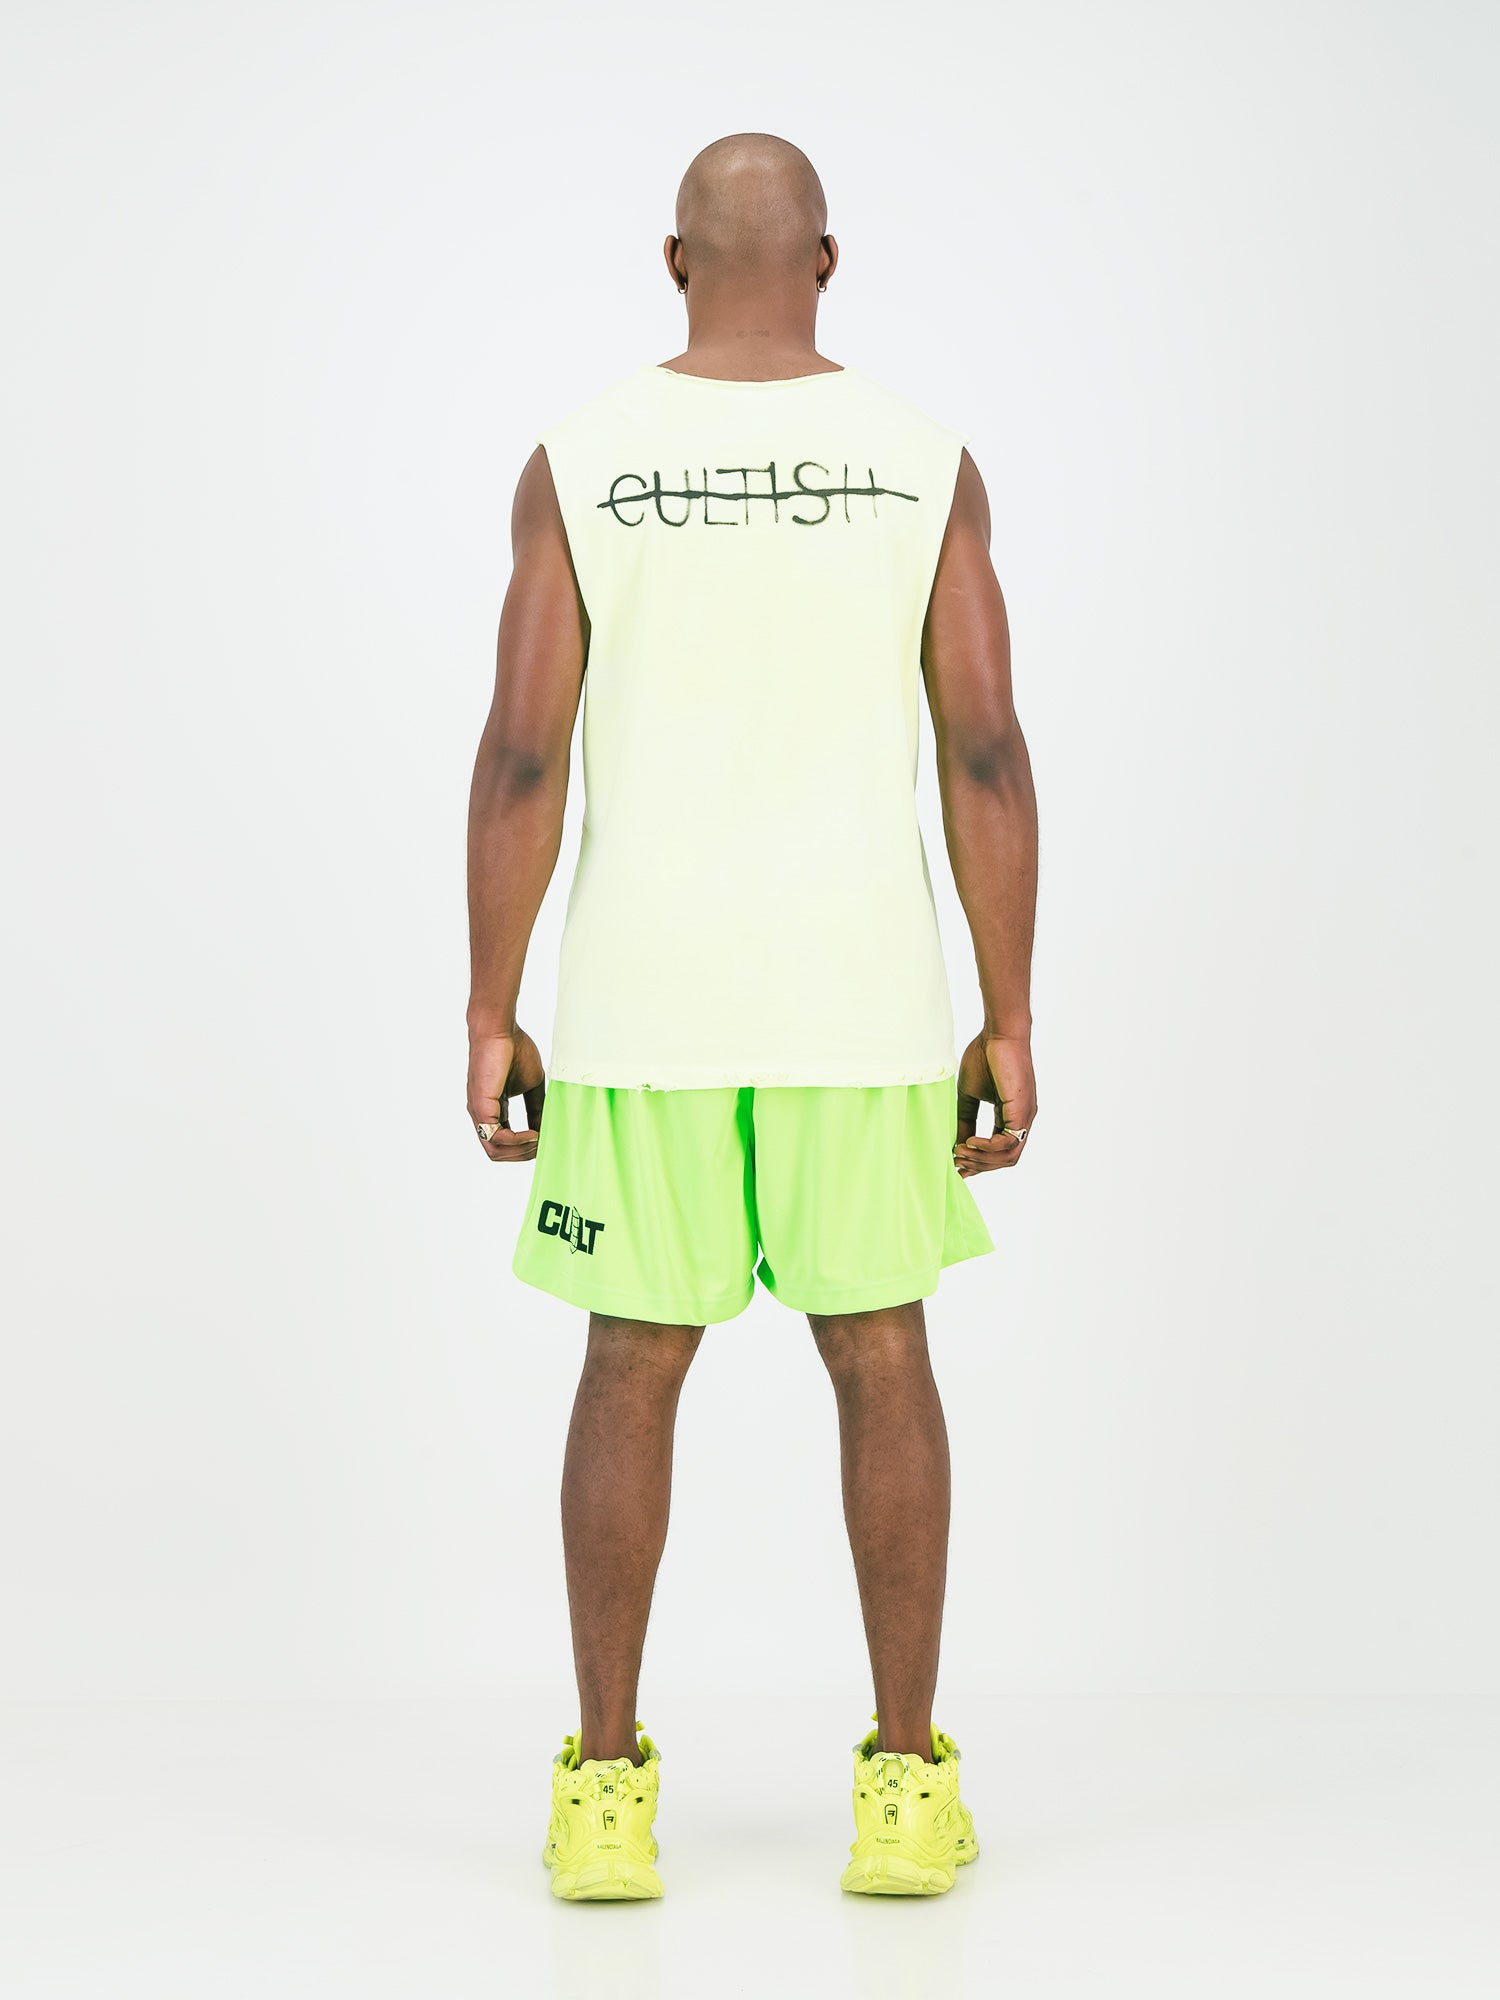 CCF Away Shorts / Neon Green